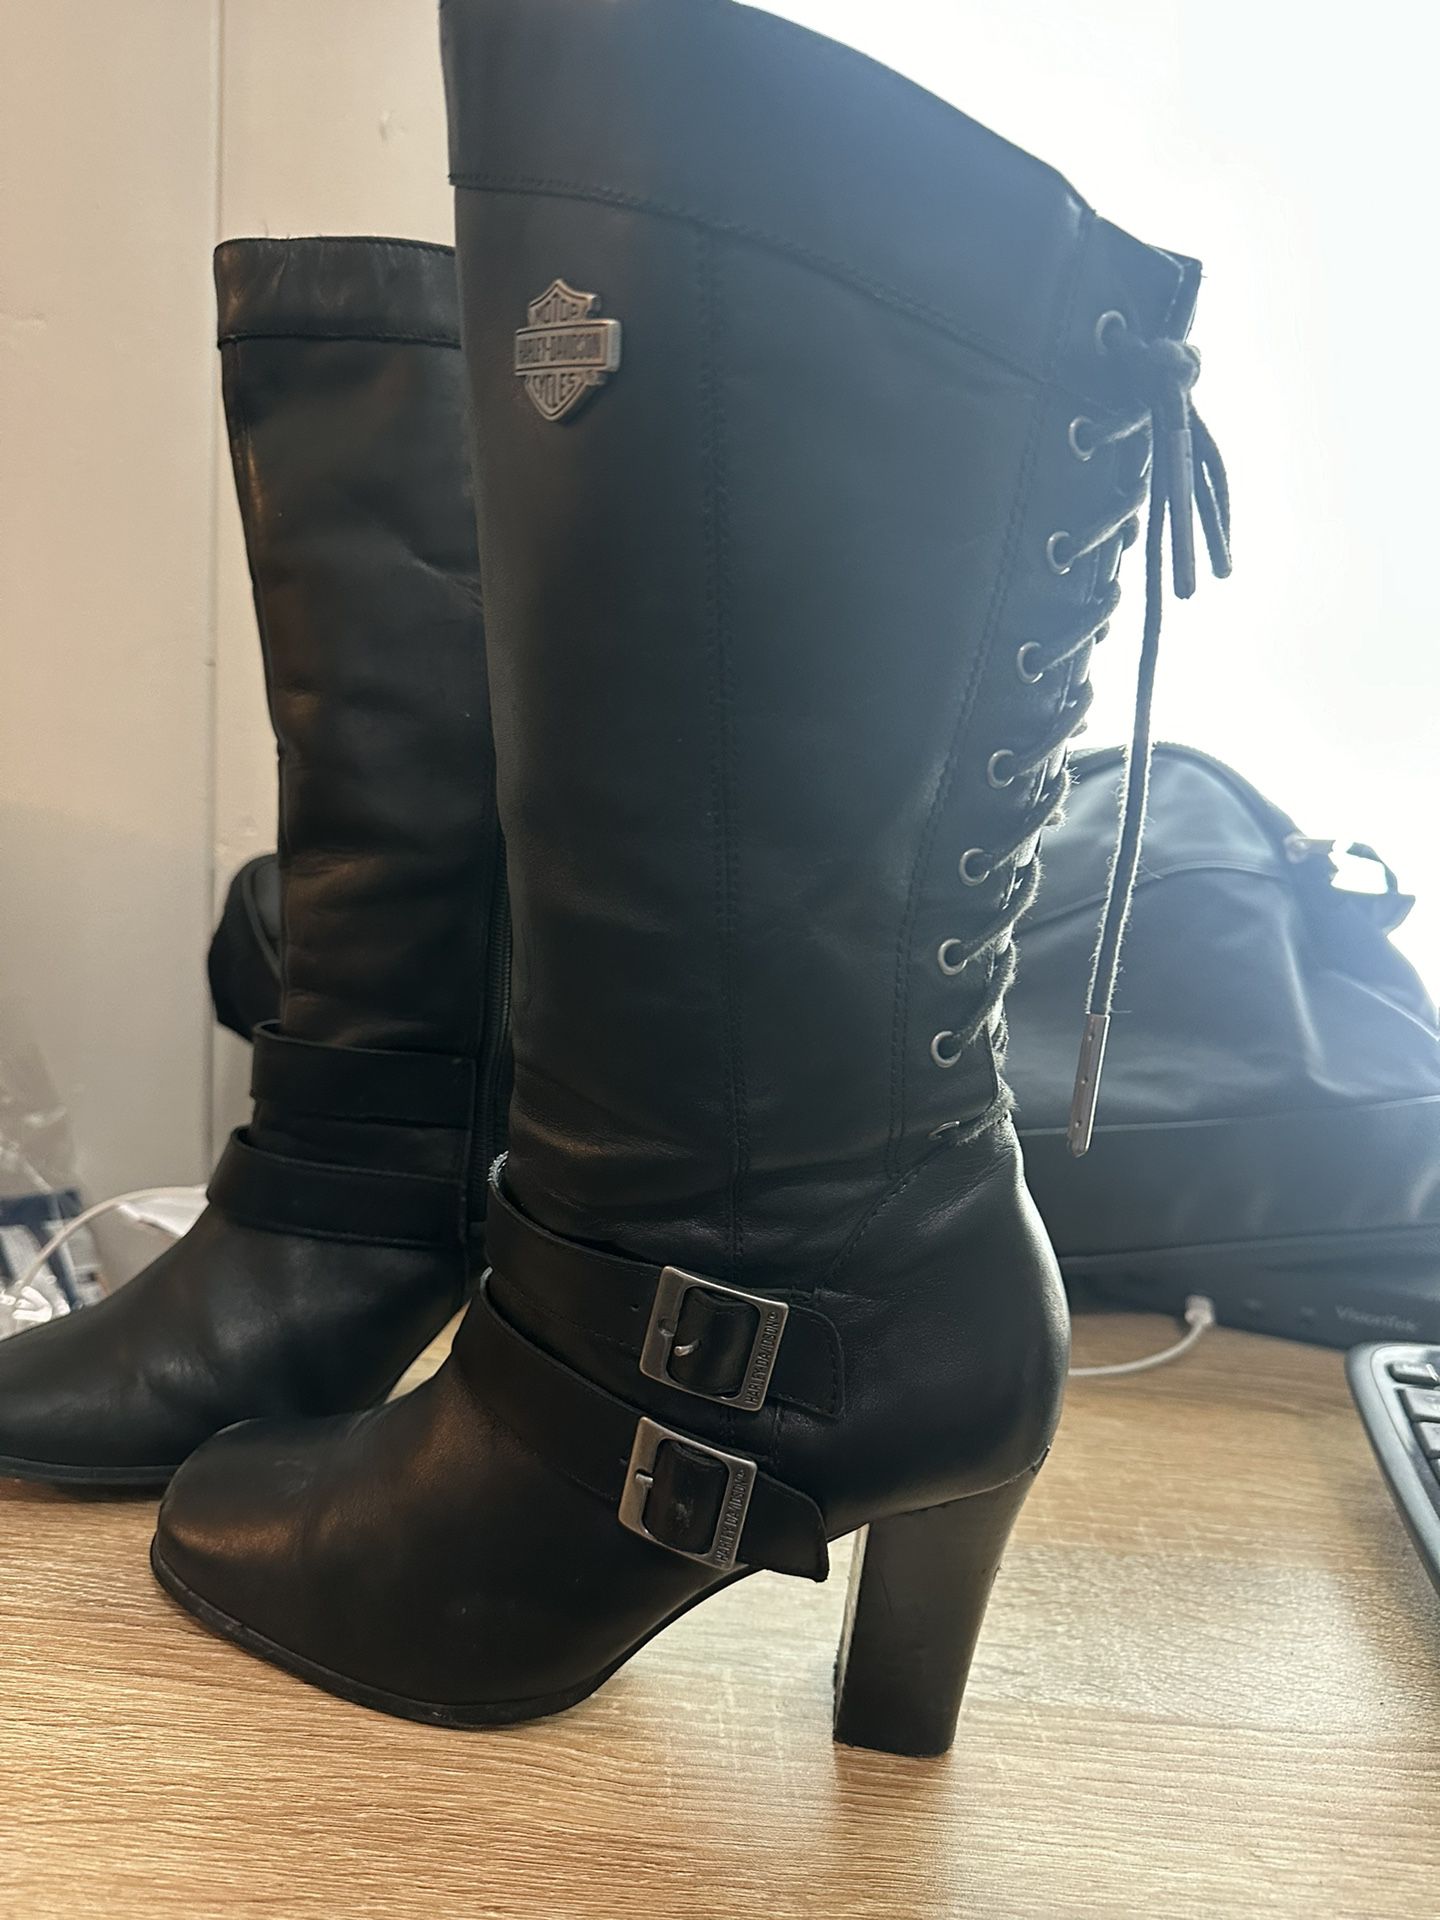 Harley Davidson Womens Boots Size 7 1/2